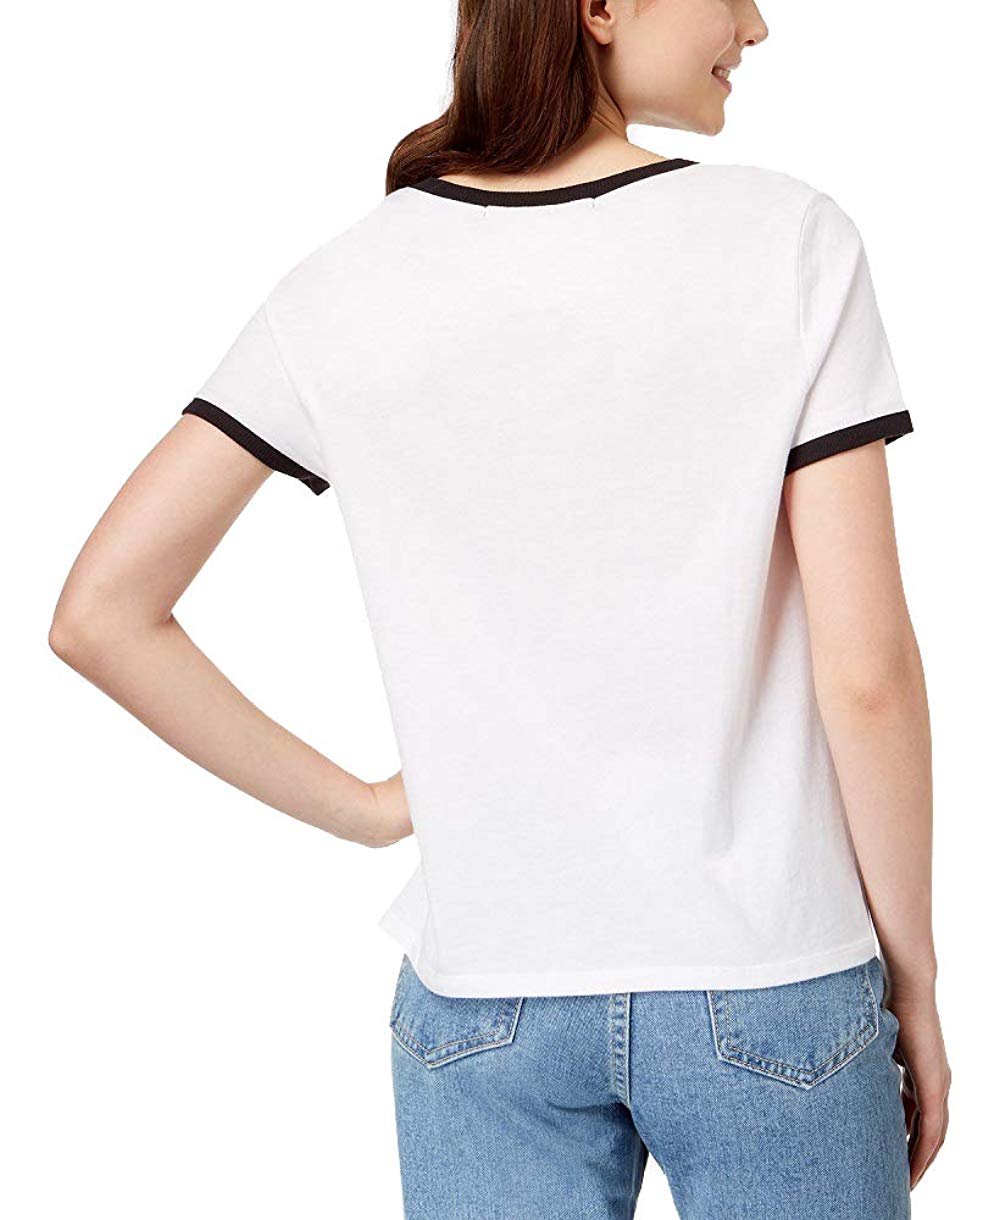 Rebellious One Juniors Cotton Graphic Ringer T-Shirt